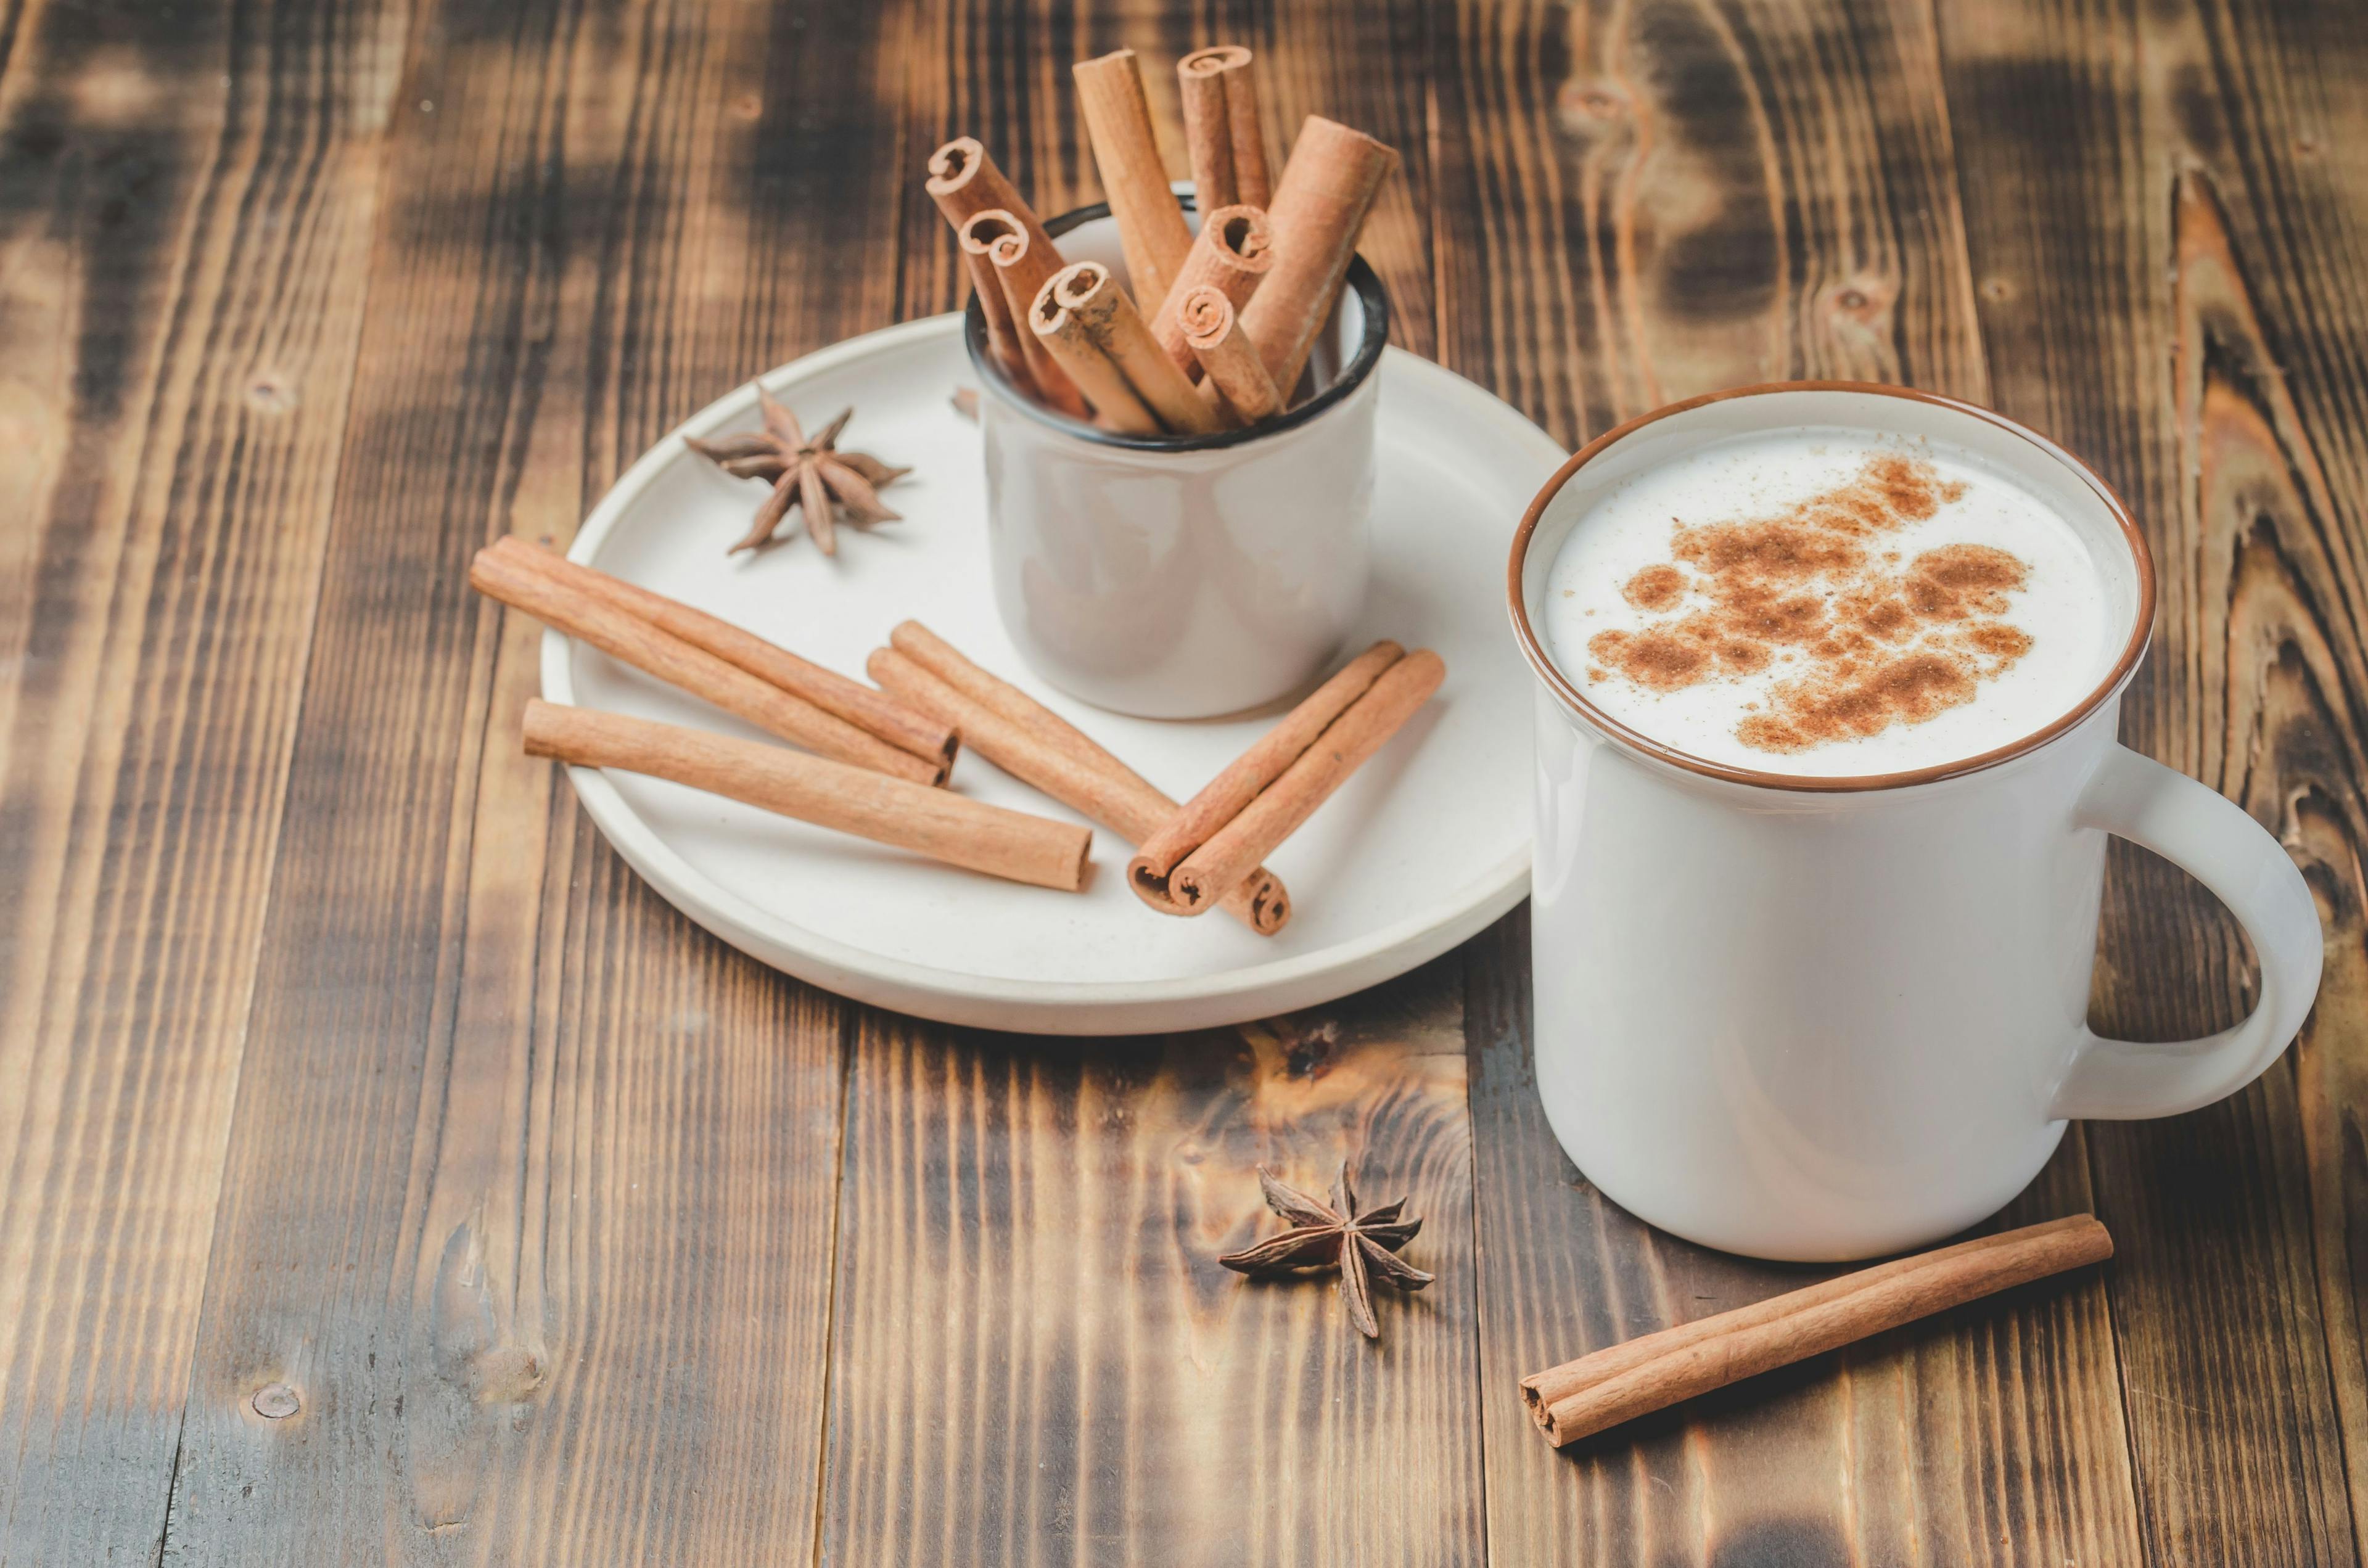 A mug of eggnog surrounded by cinnamon sticks.